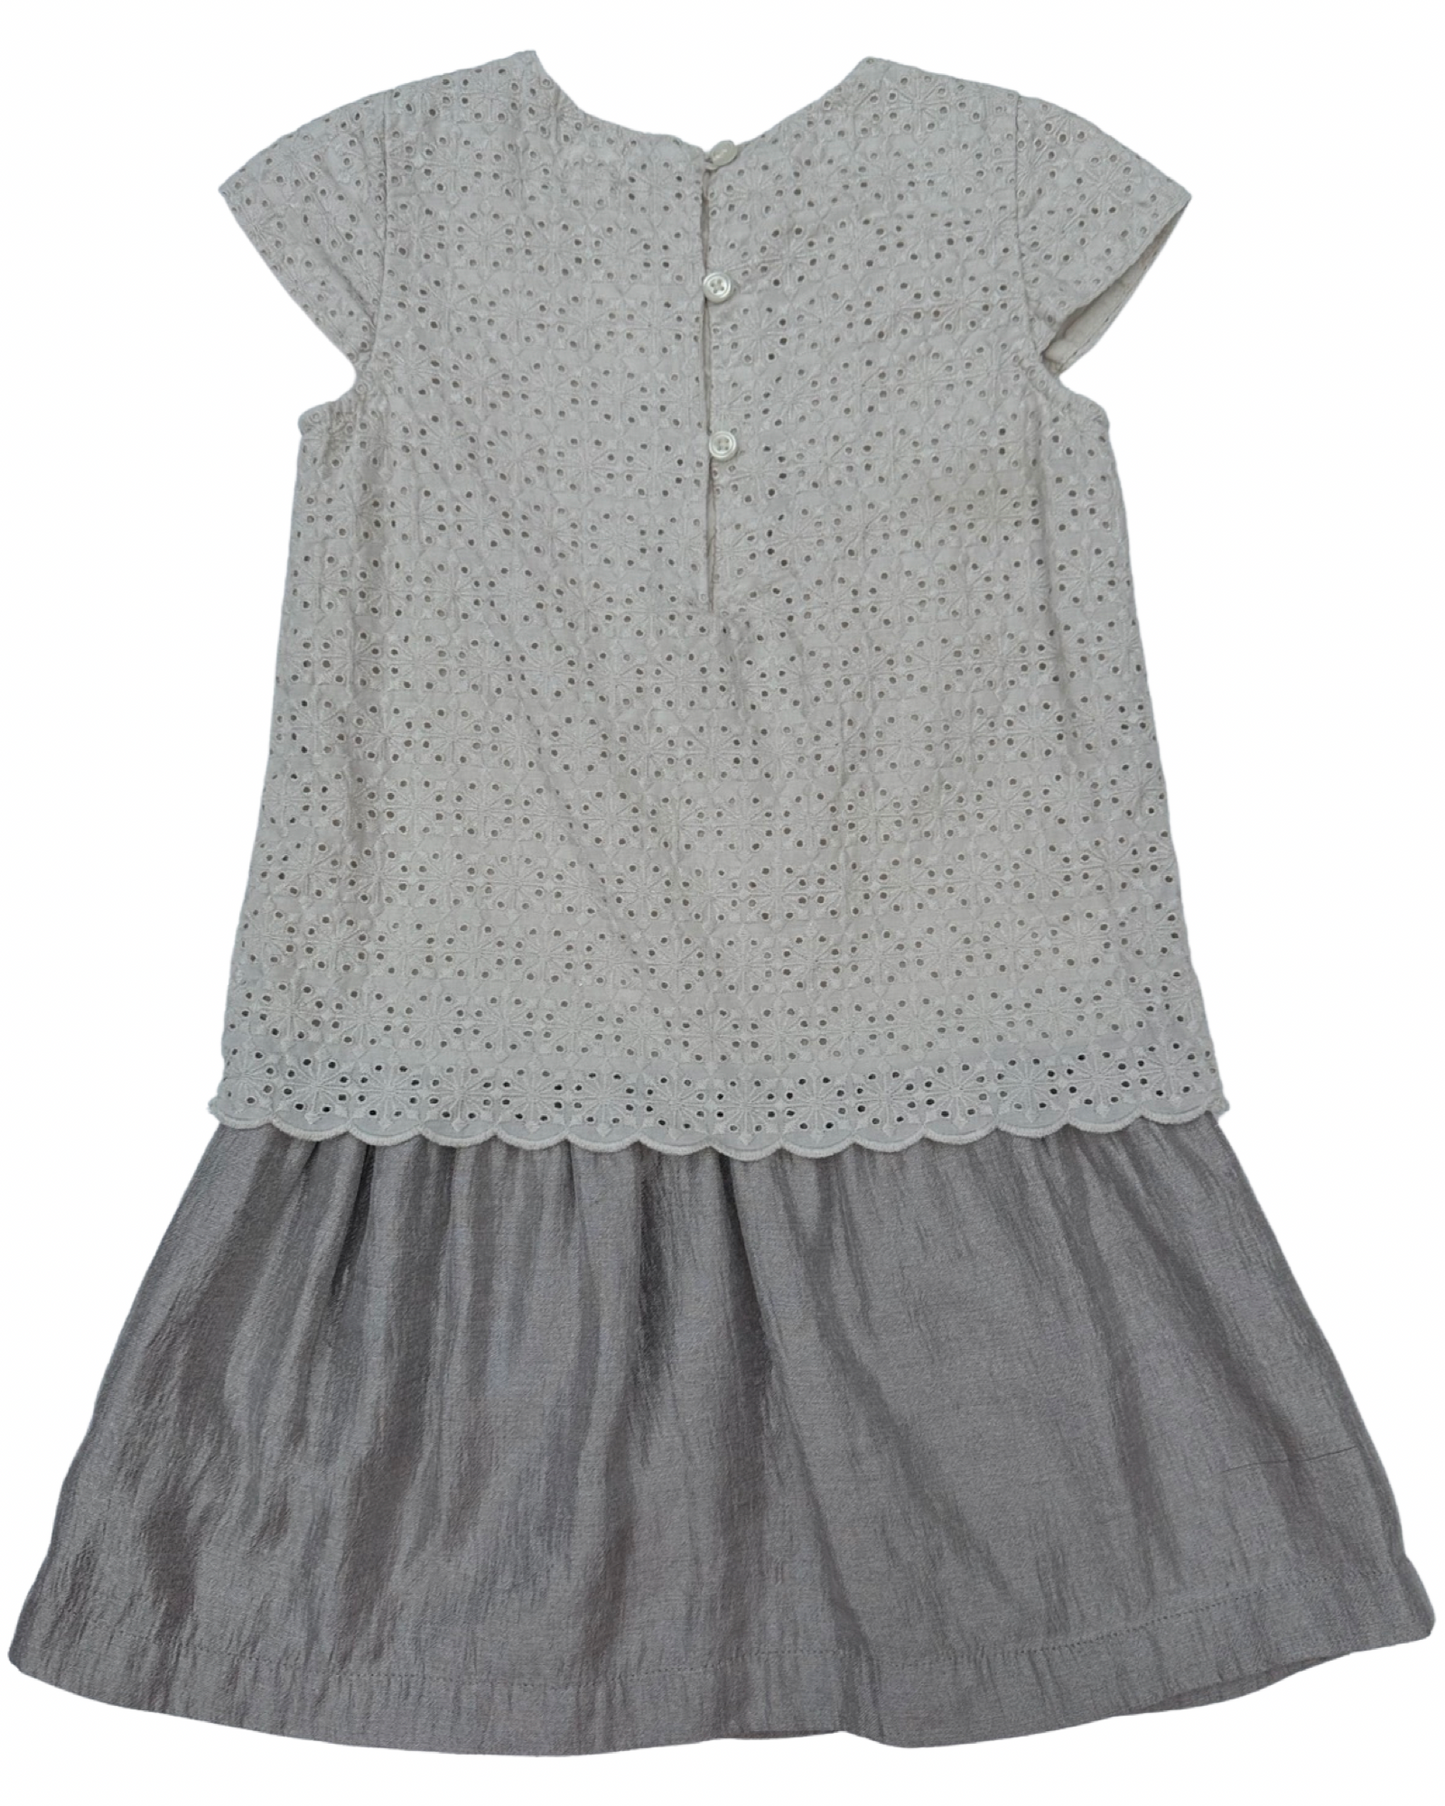 Gap kids cream/silver party dress (size 4-5yrs)